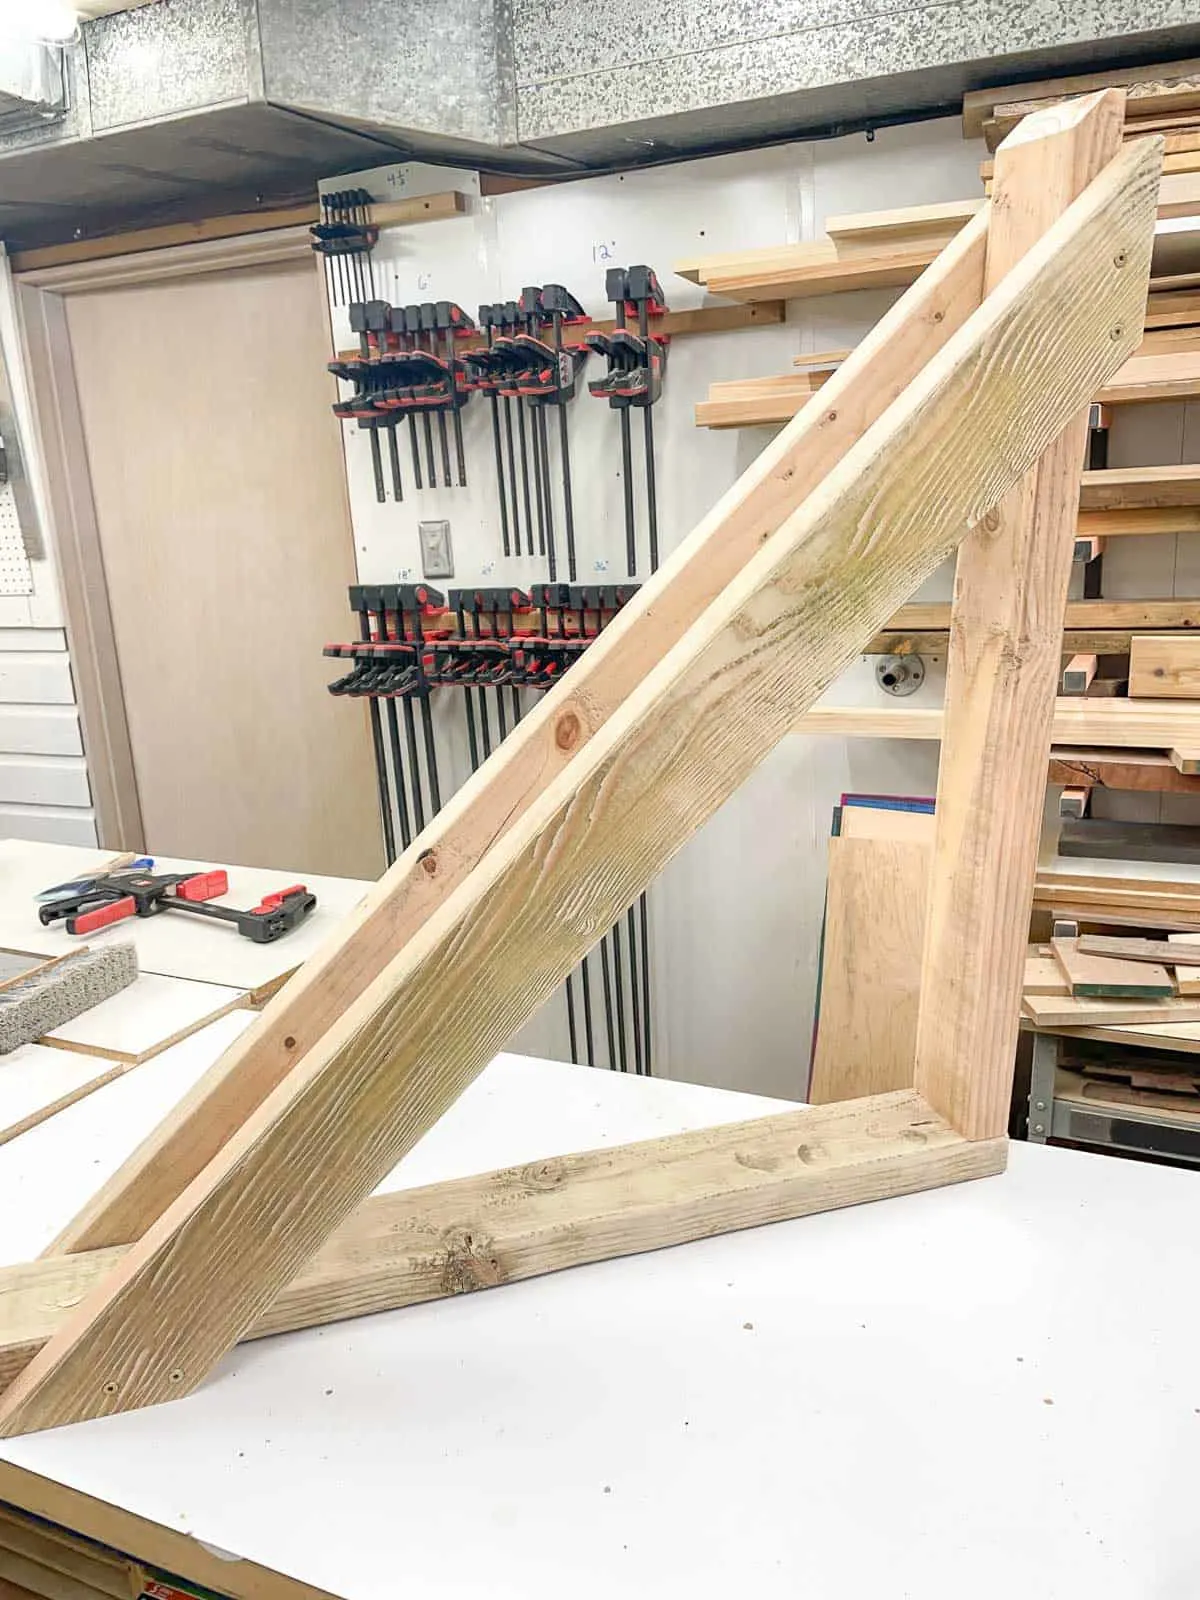 DIY wood bike rack assembled on workbench